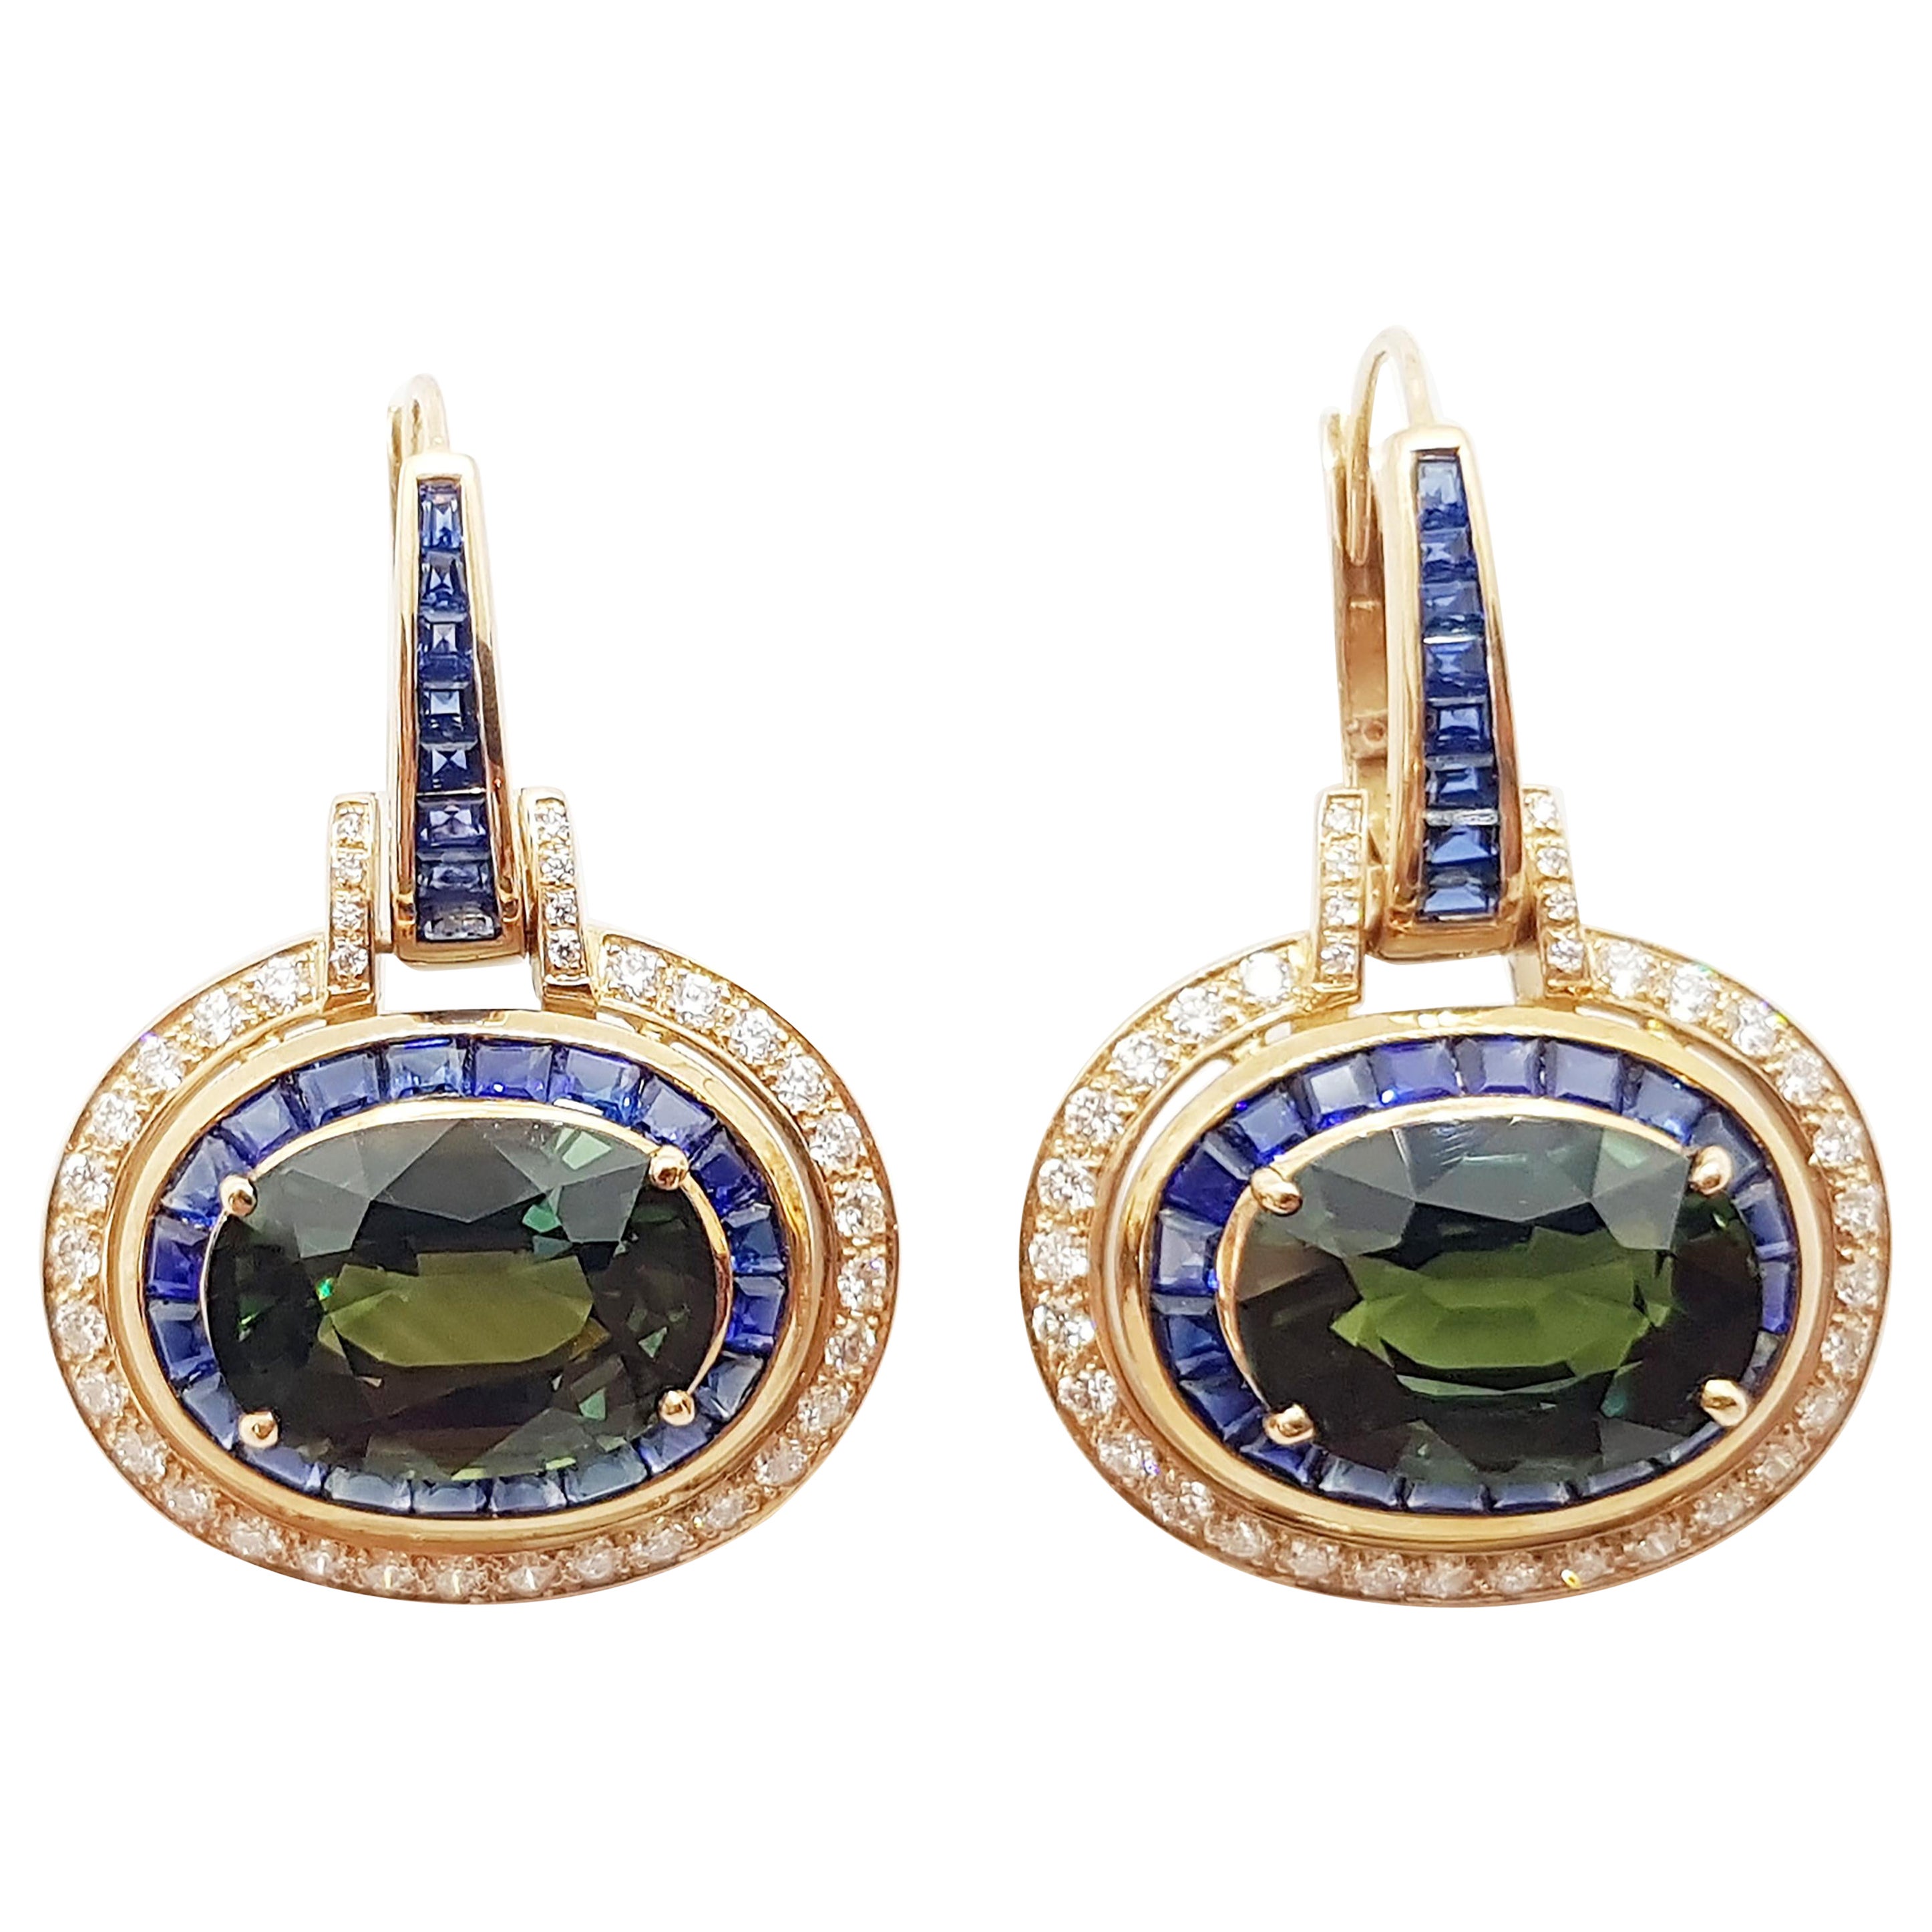  Boucles d'oreilles en or rose 18 carats avec saphir vert, saphir bleu et diamants